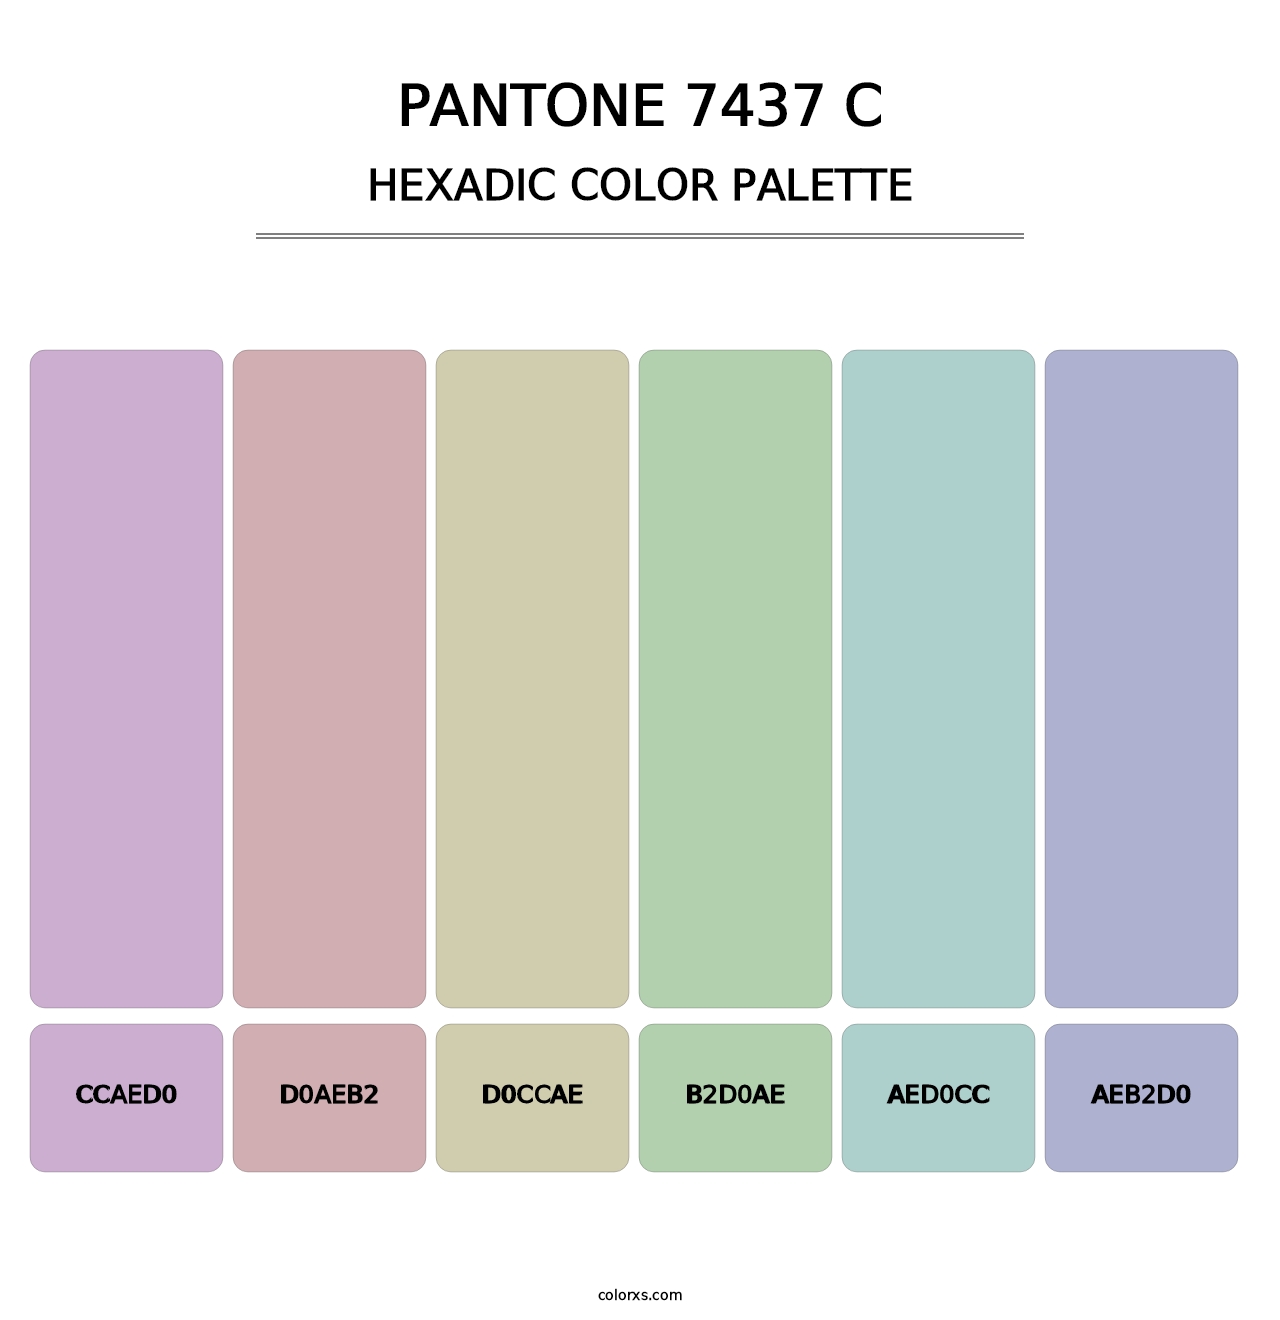 PANTONE 7437 C - Hexadic Color Palette